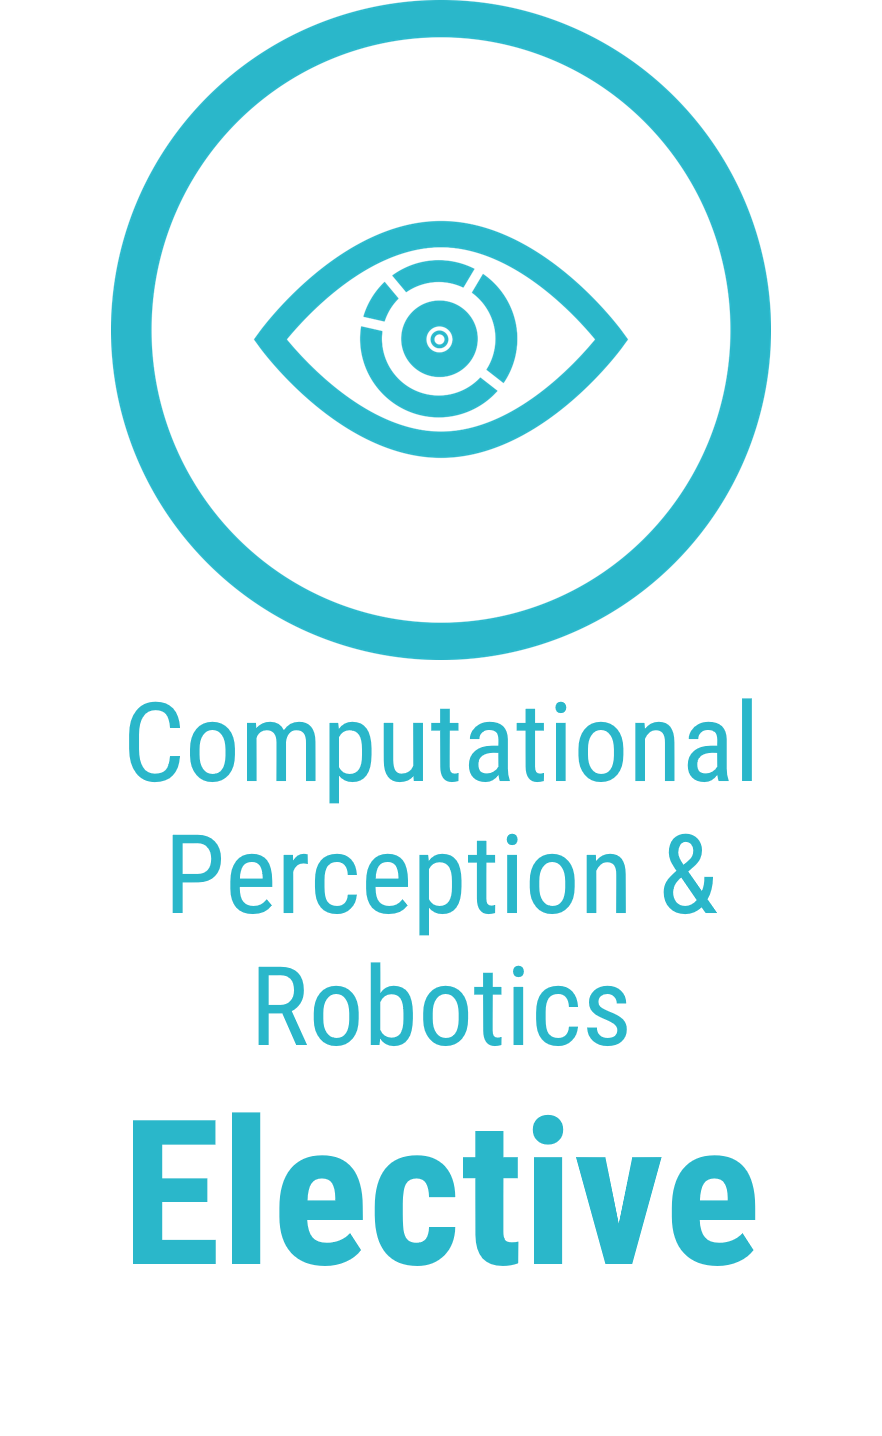 Computational Perception & Robotics Elective